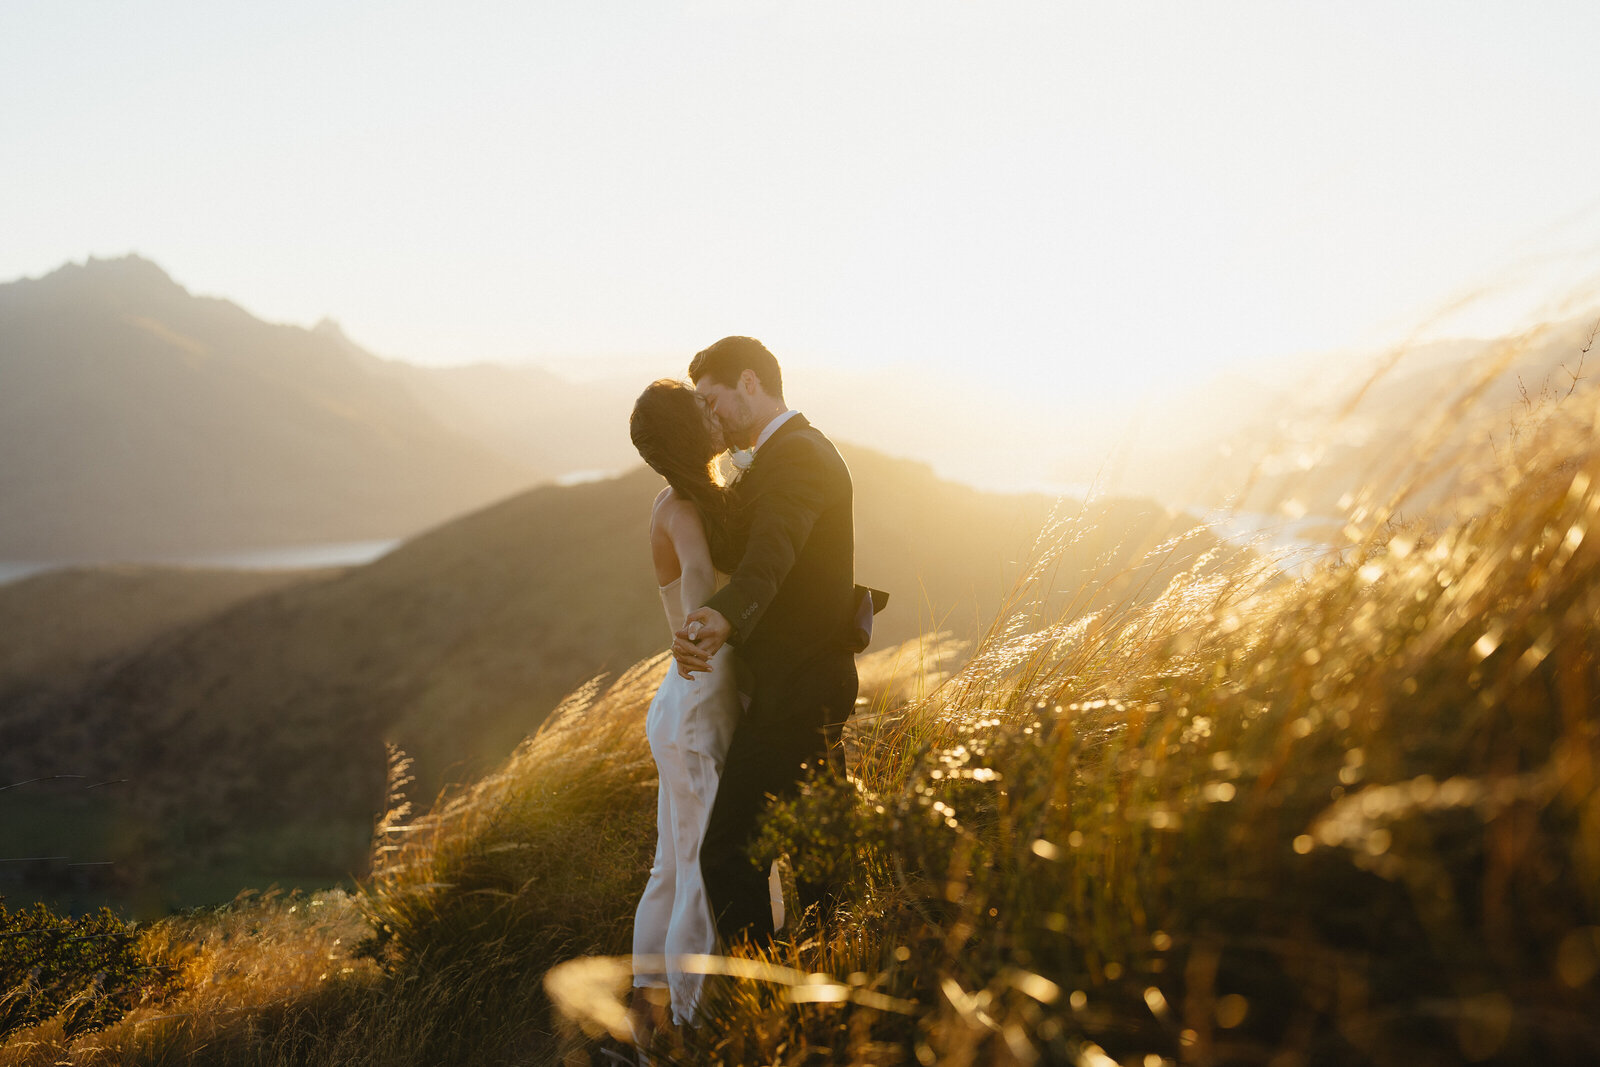 Wedding photographer Queenstown - Sunset Elopement